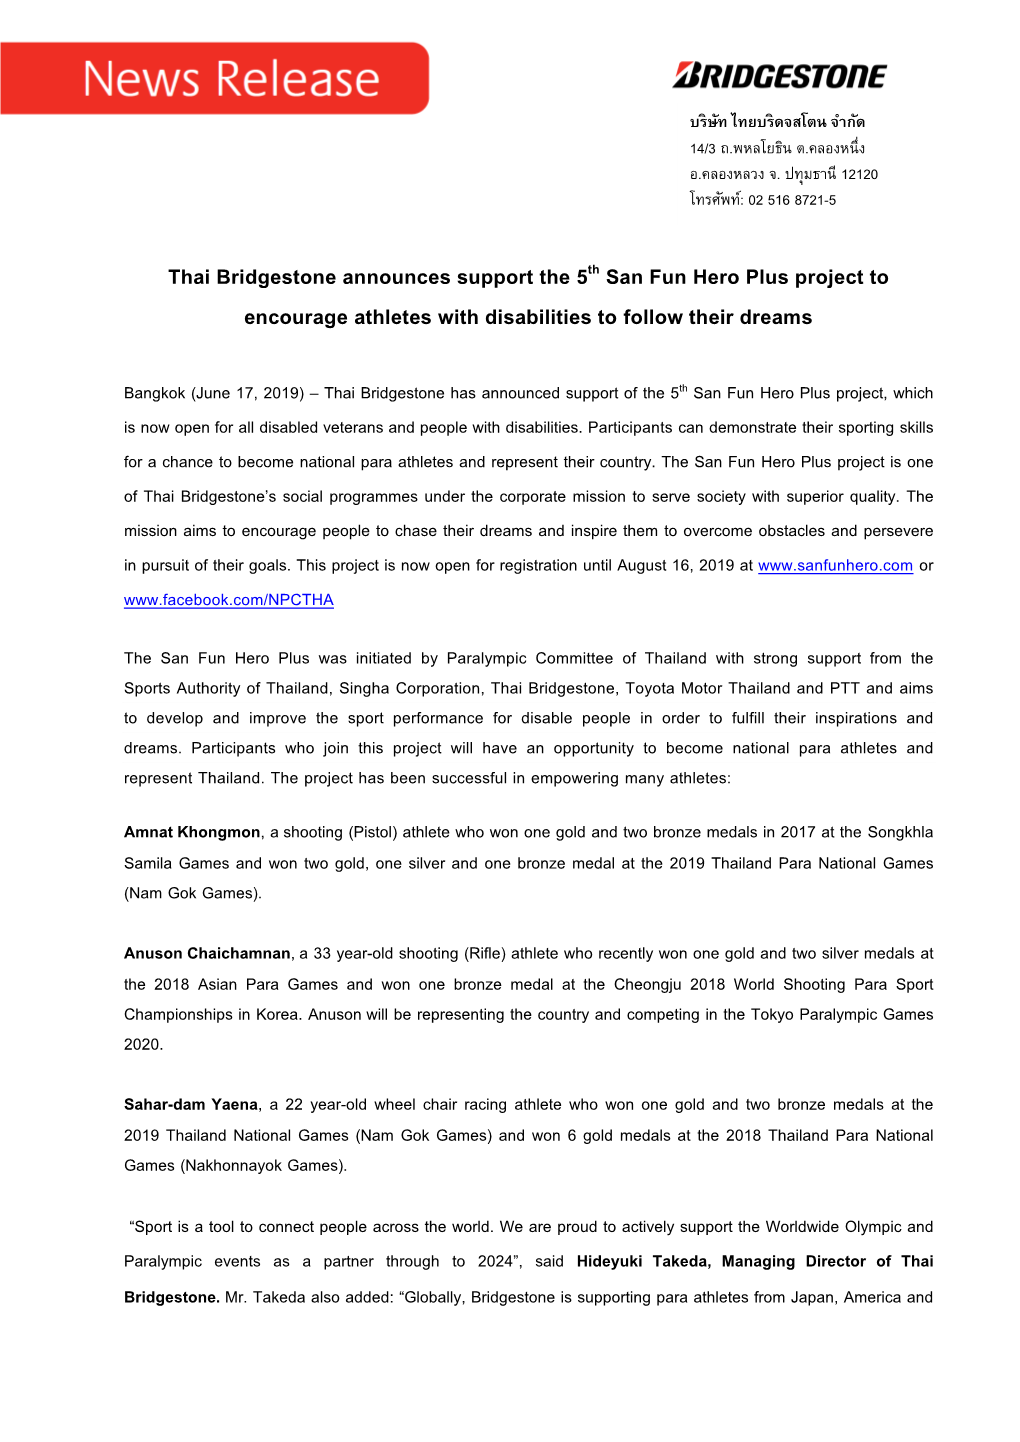 Thai Bridgestone Announces Support the 5 Th San Fun Hero Plus Project To